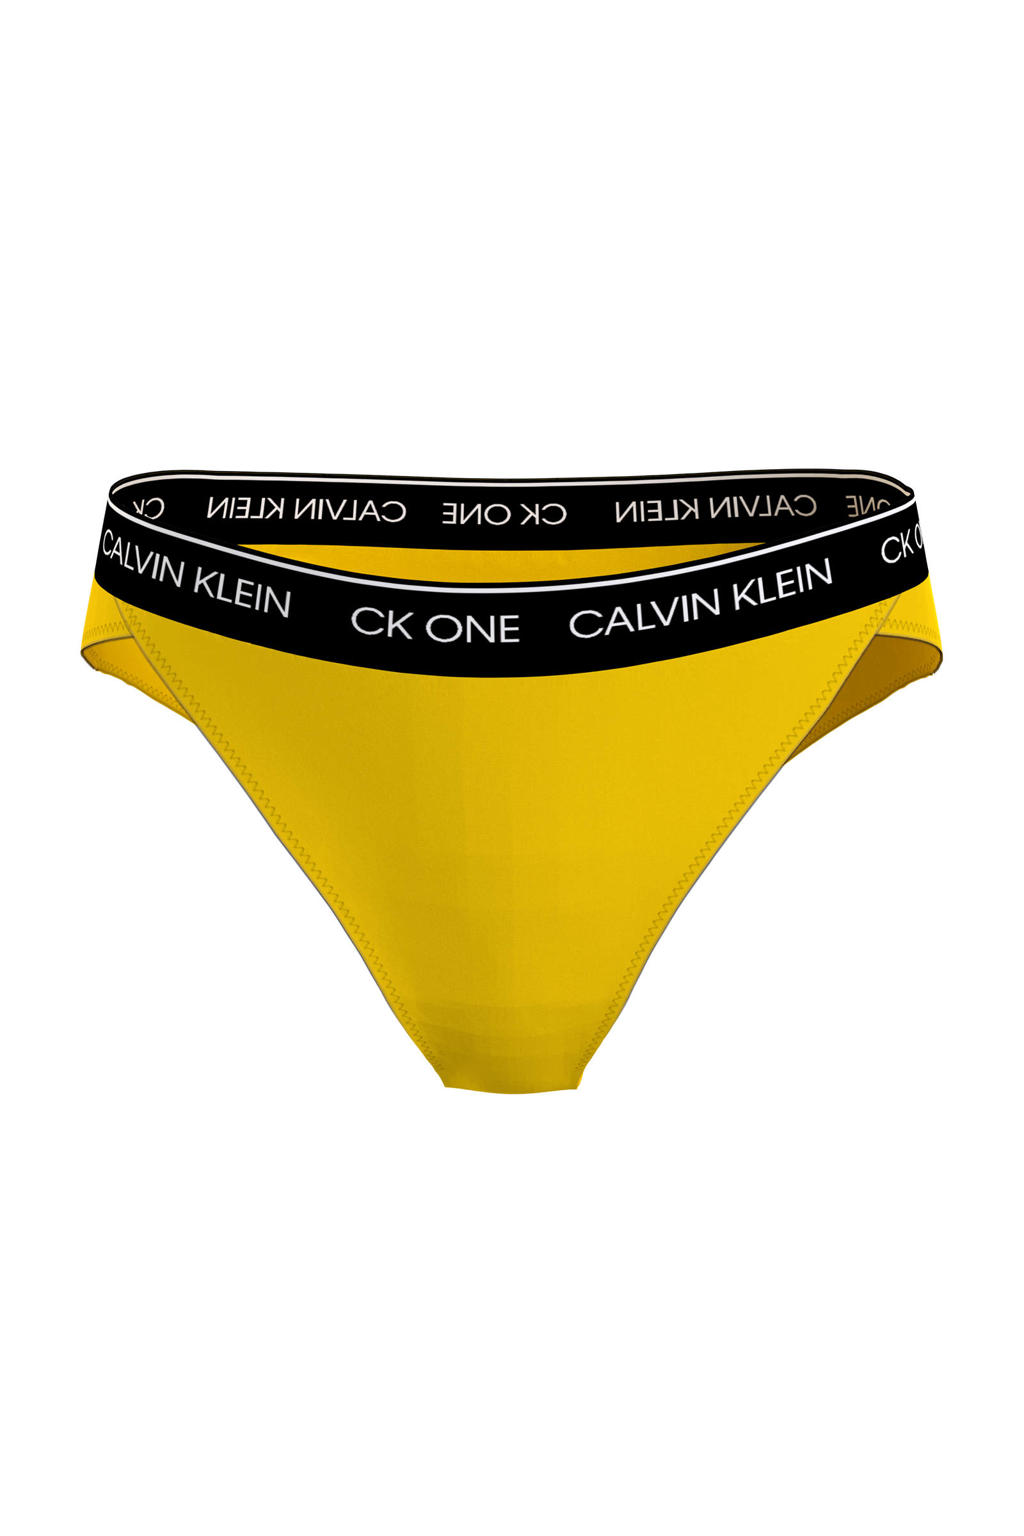 Calvin Klein bikinibroekje geel